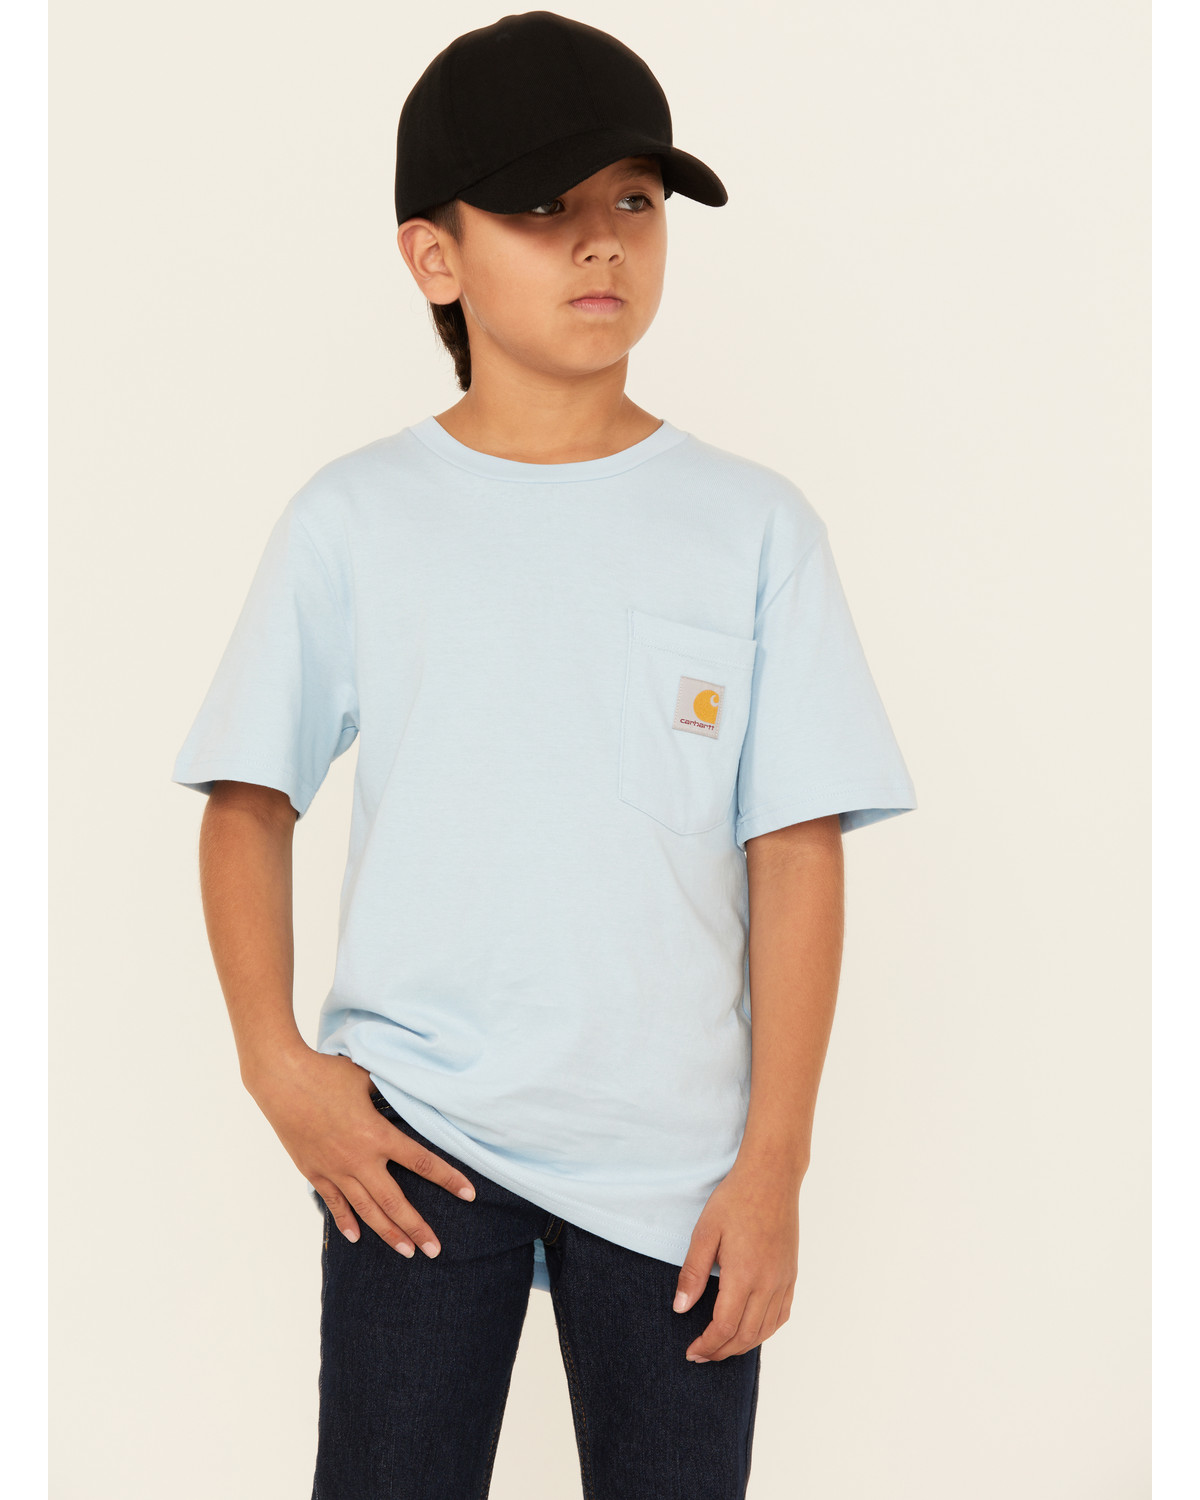 Carhartt Boys' Logo Short Sleeve Graphic T-Shirt